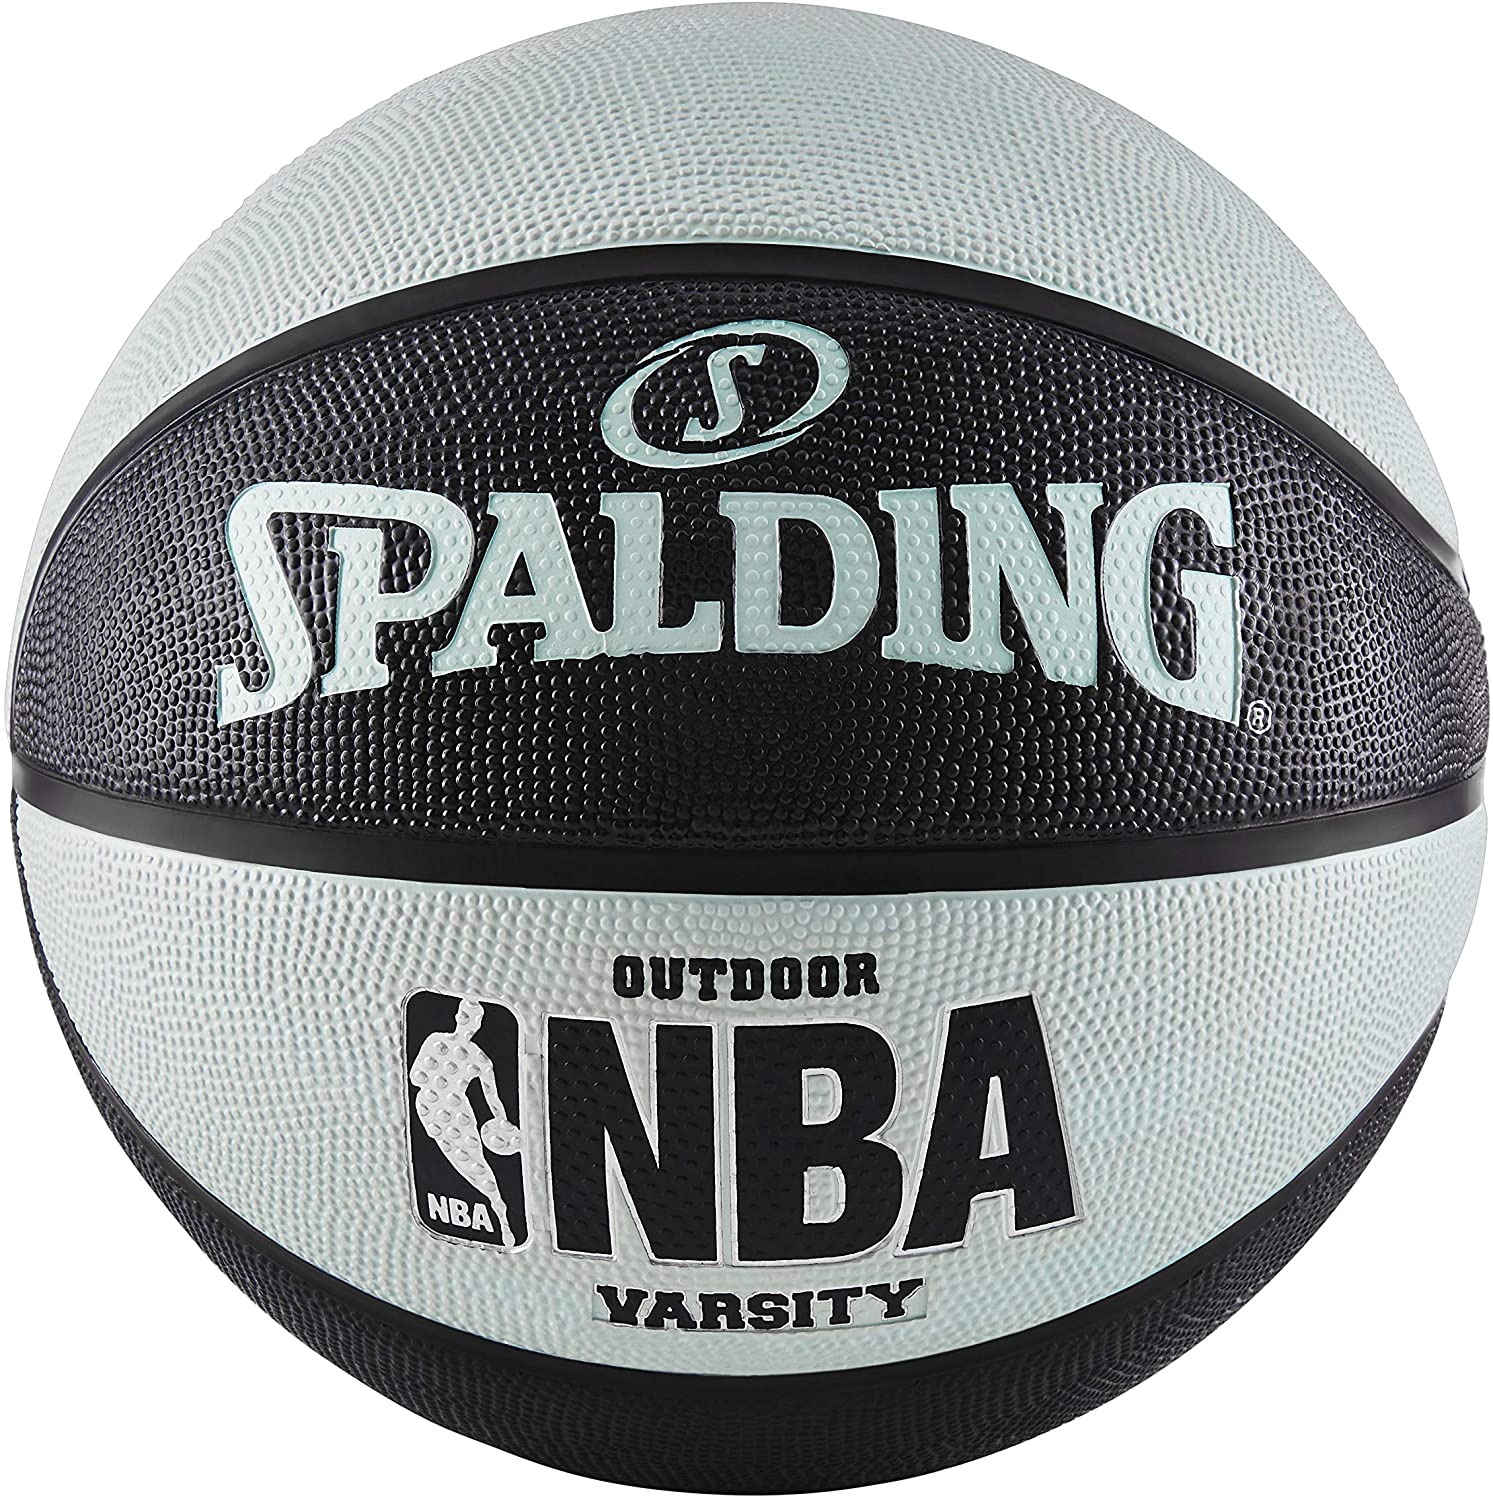 Spalding NBA Varsity Rubber Outdoor Basketball